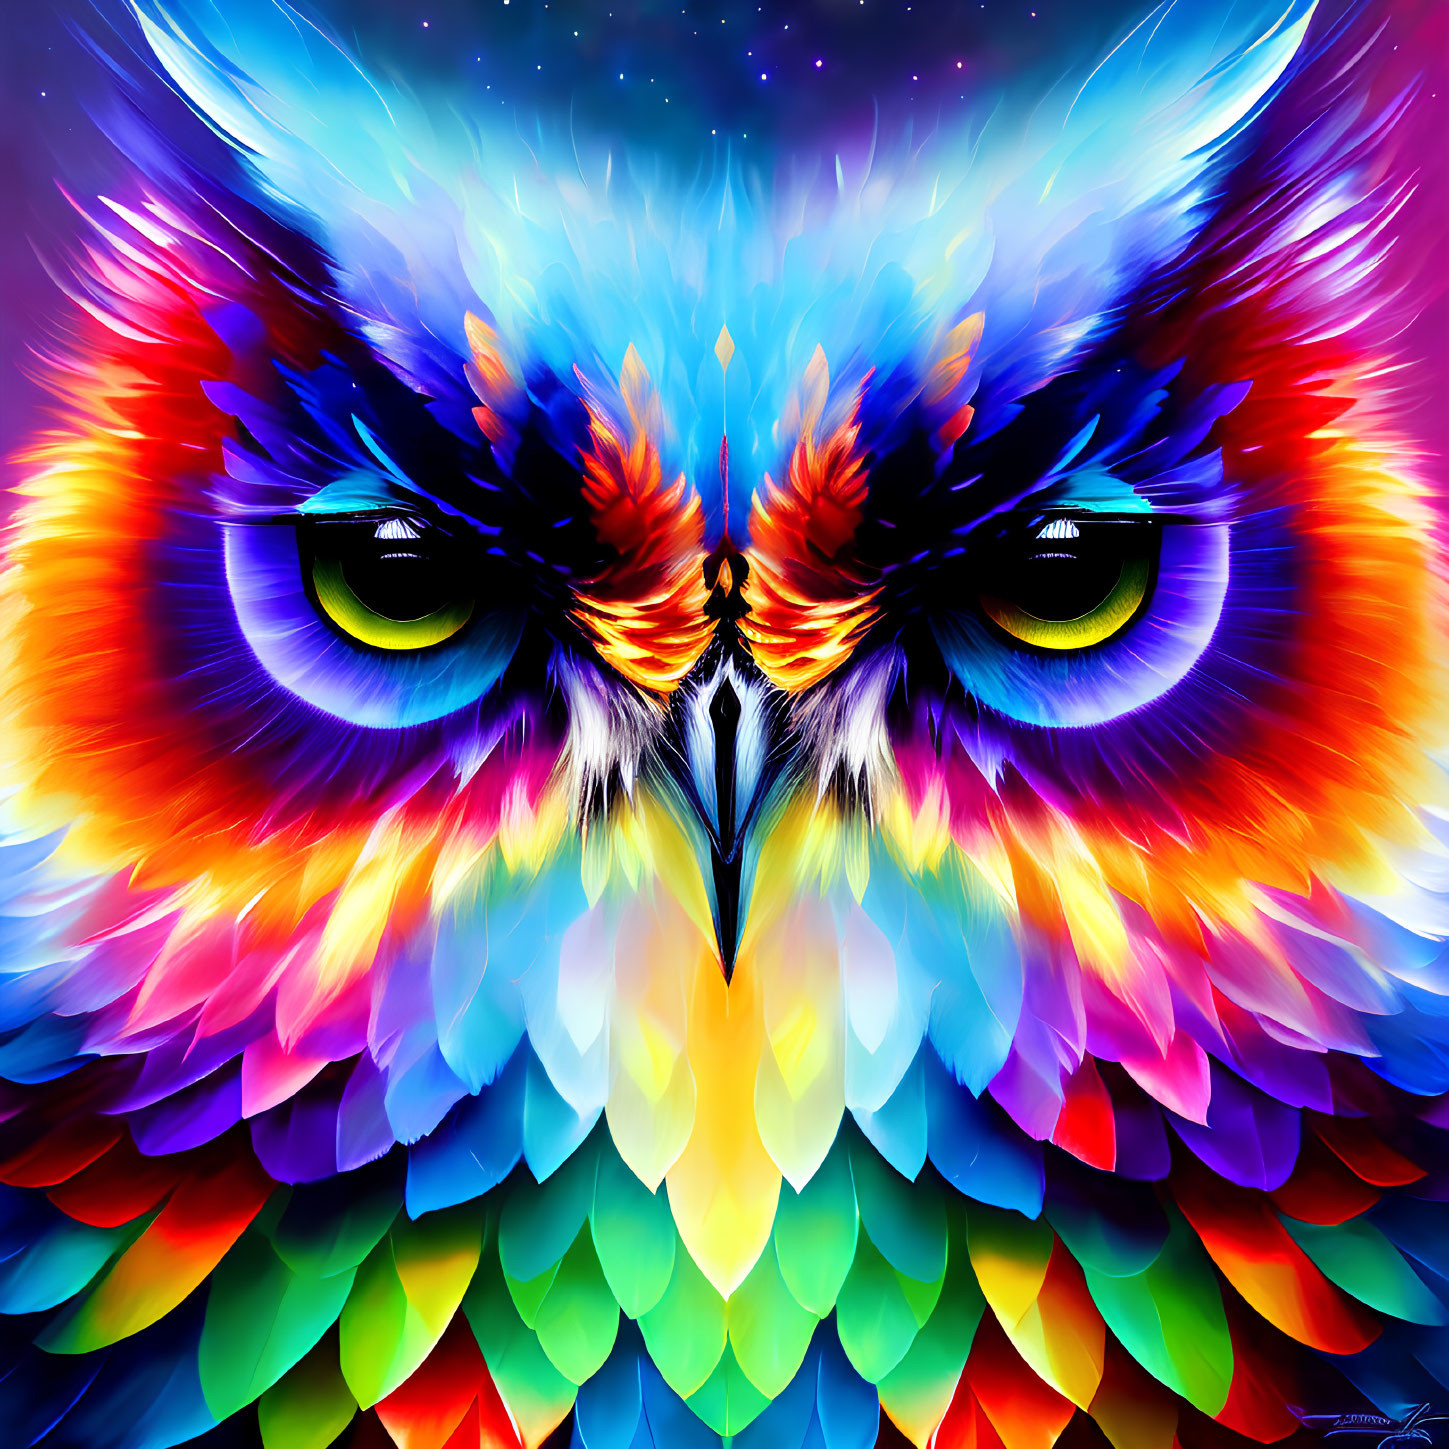 Colorful Rainbow Owl Illustration with Intense Gaze